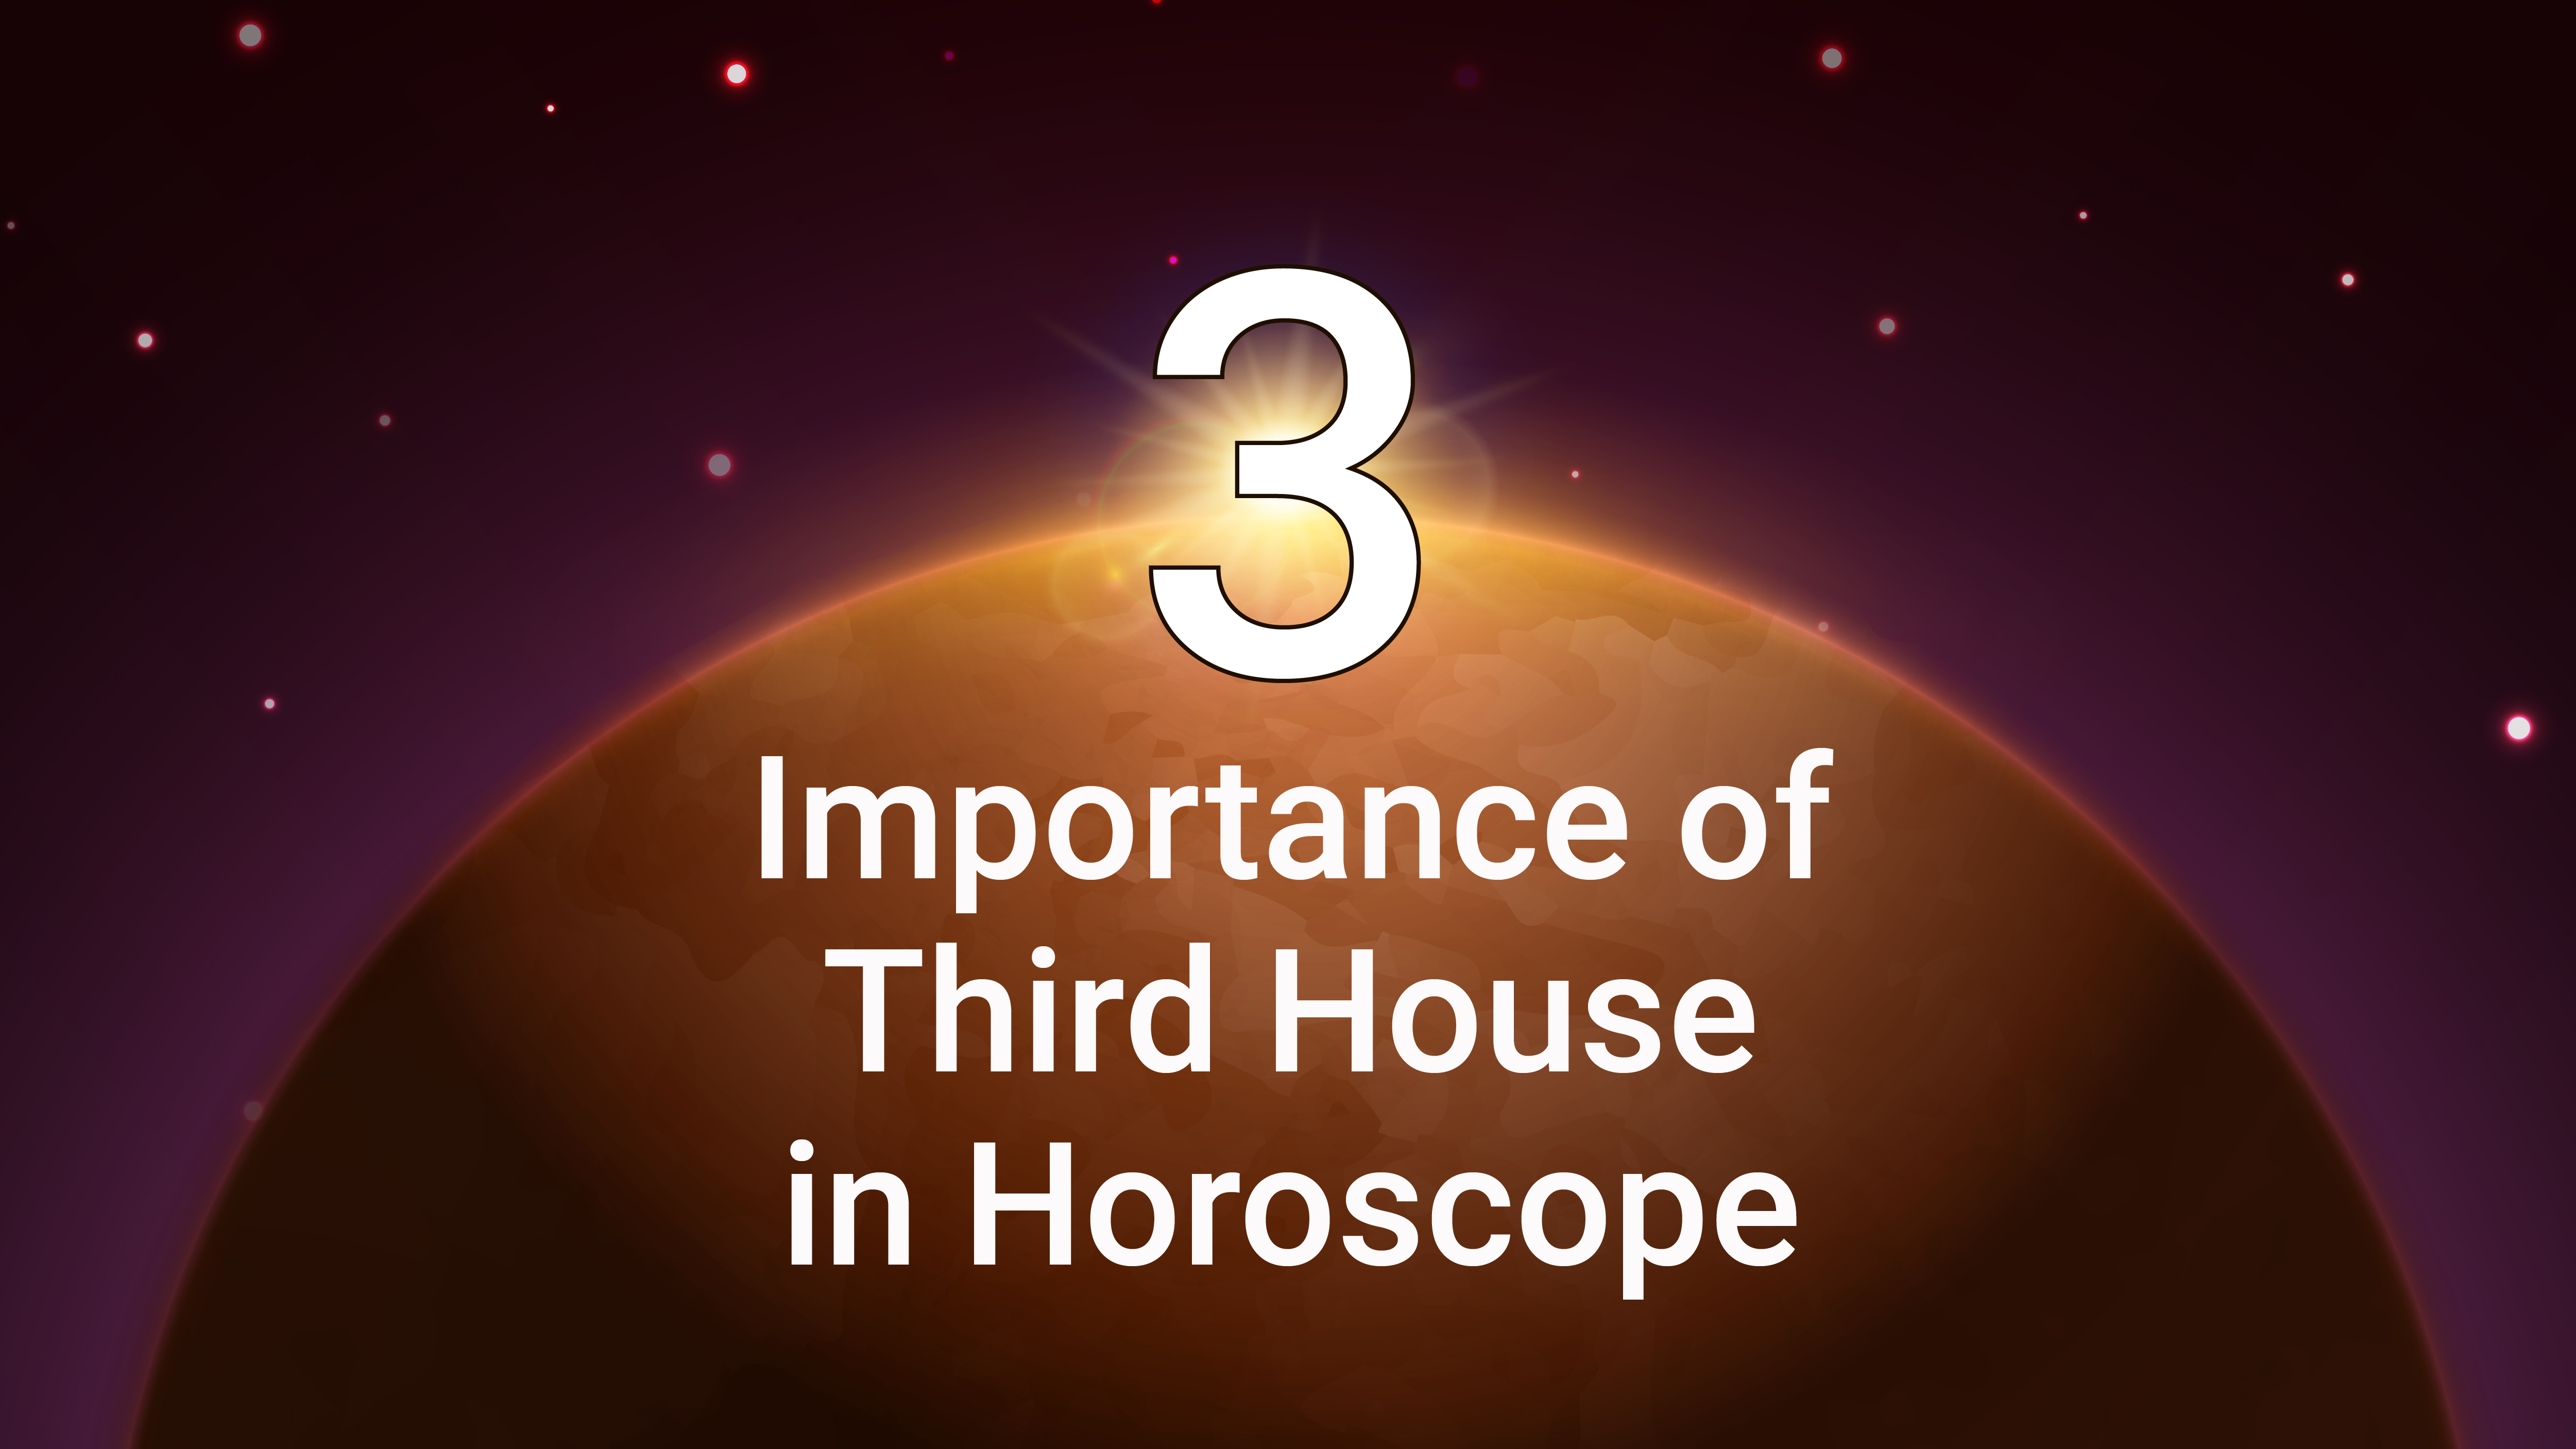 vedic astrology venus 3rd house from moon